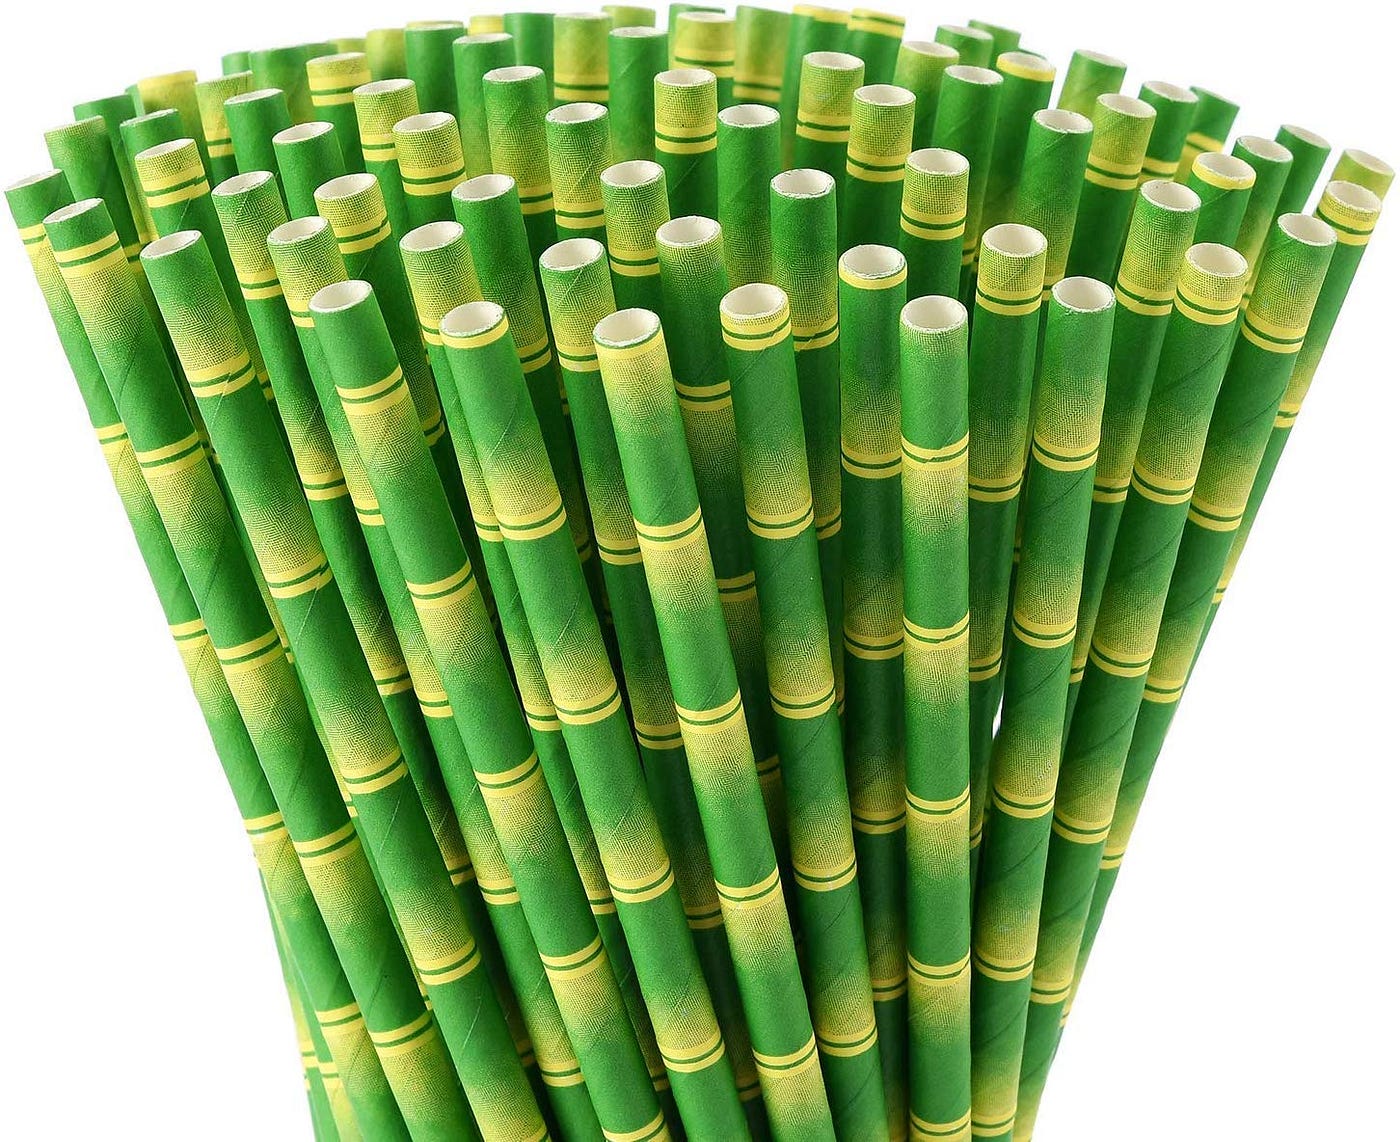 Eco Friendly Bamboo Straw